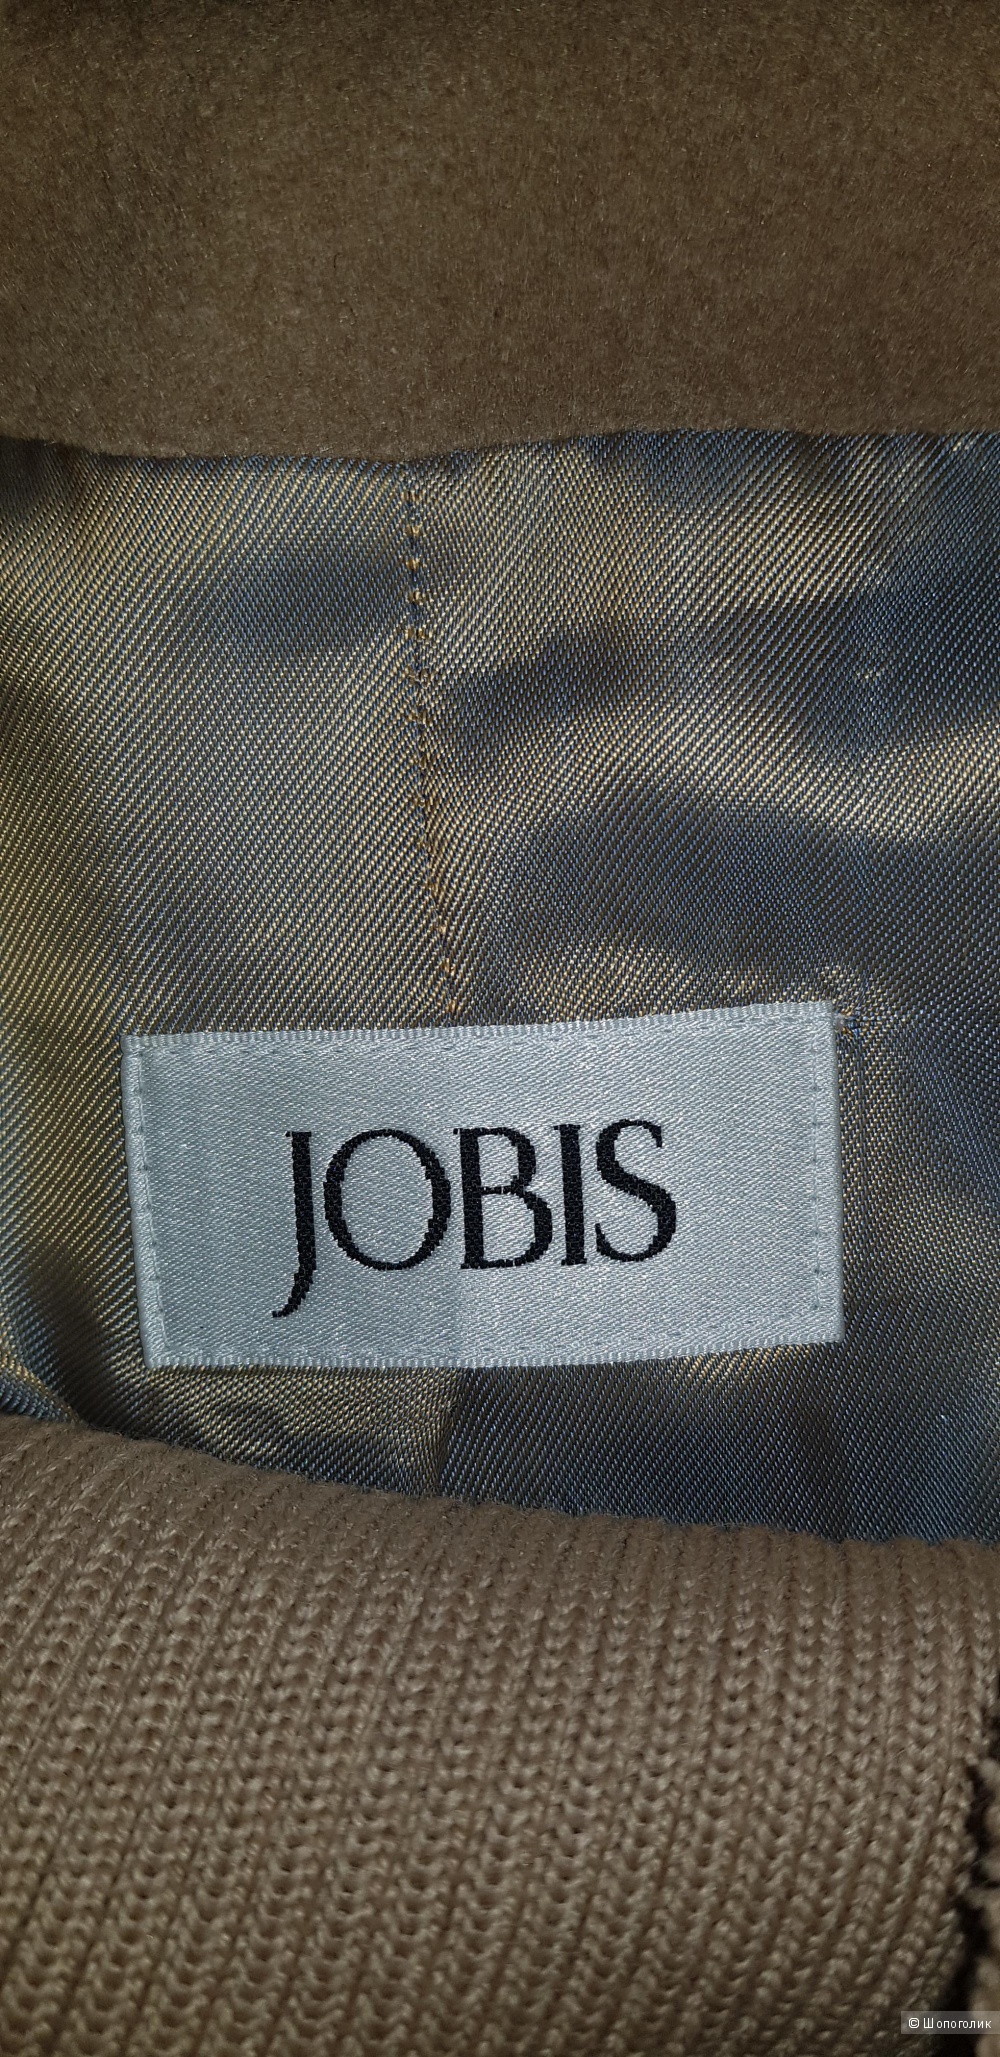 Пальто JOBIS 46rus.